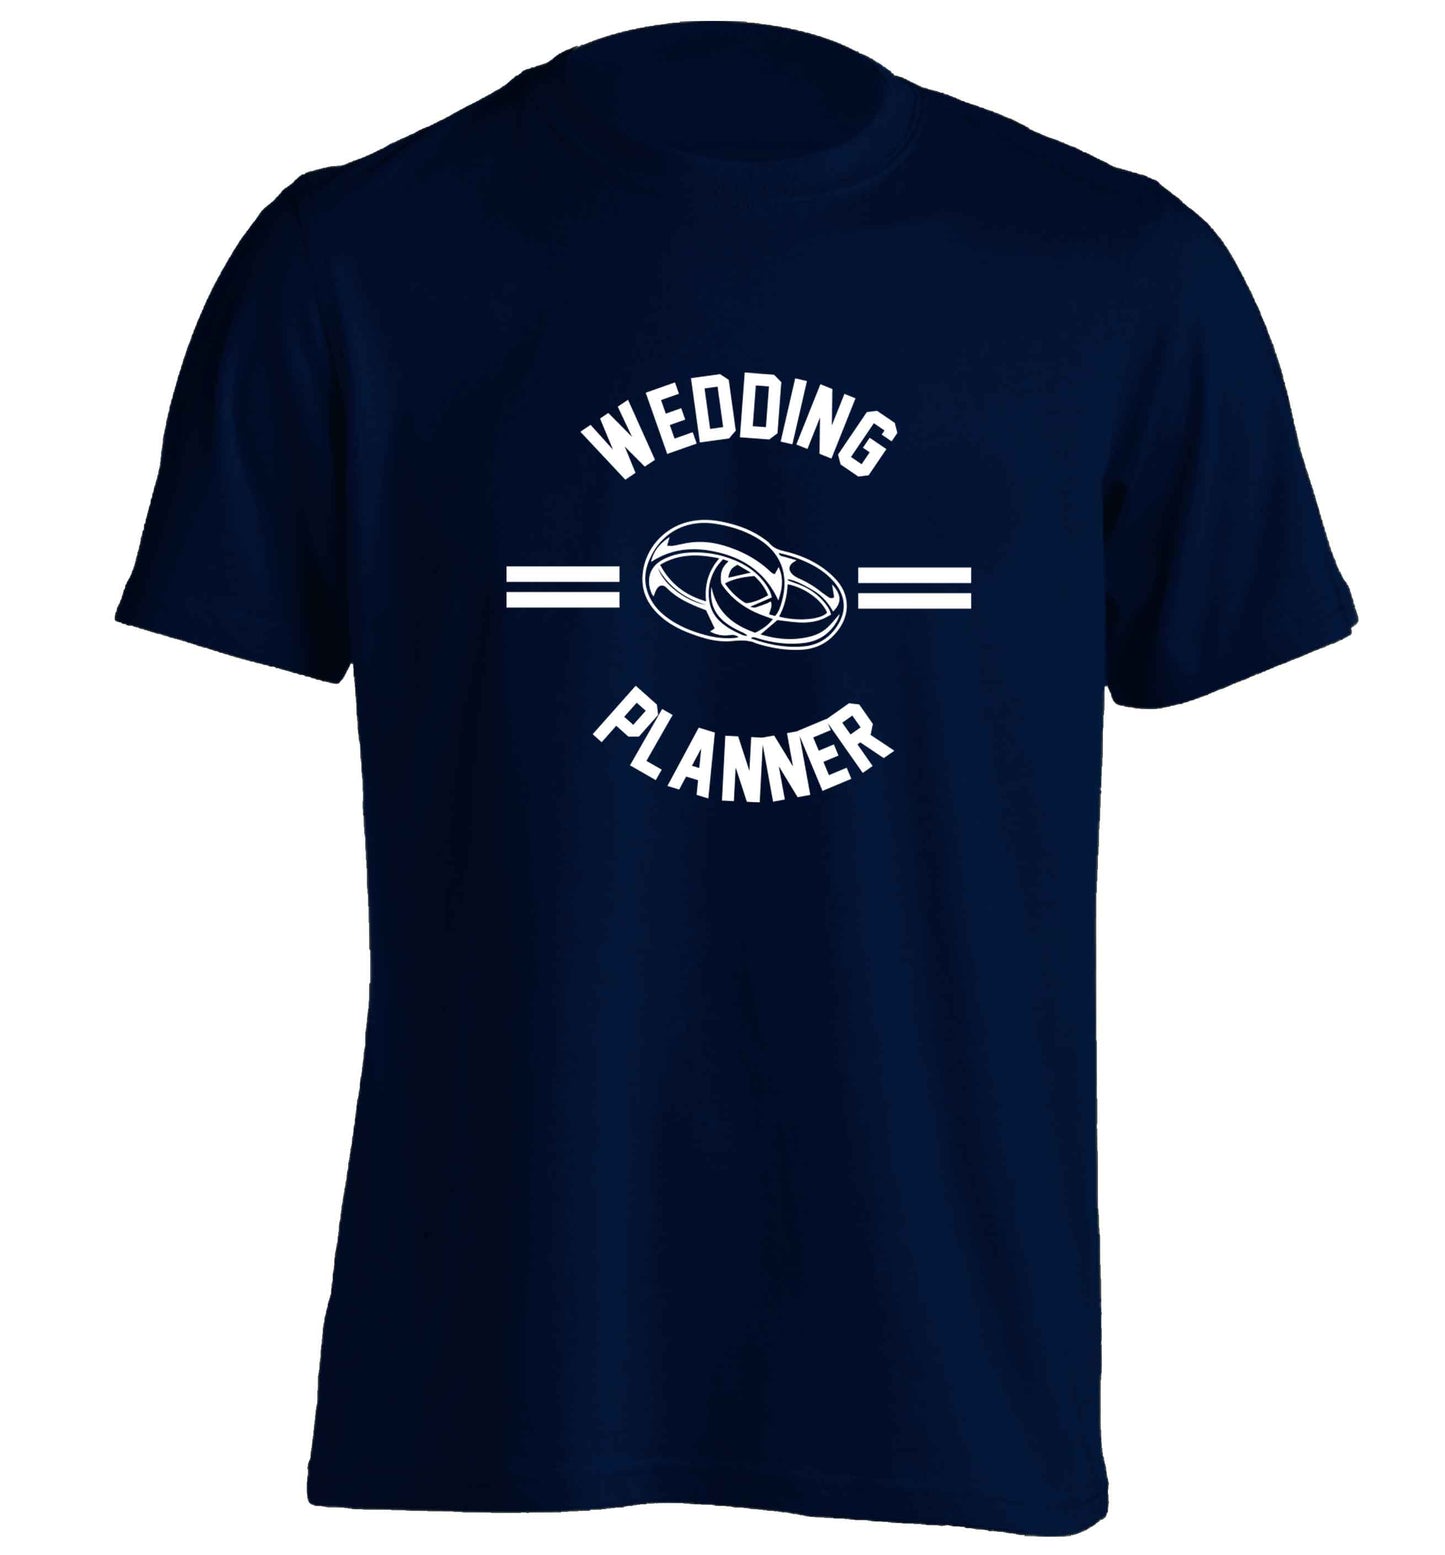 Wedding planner adults unisex navy Tshirt 2XL